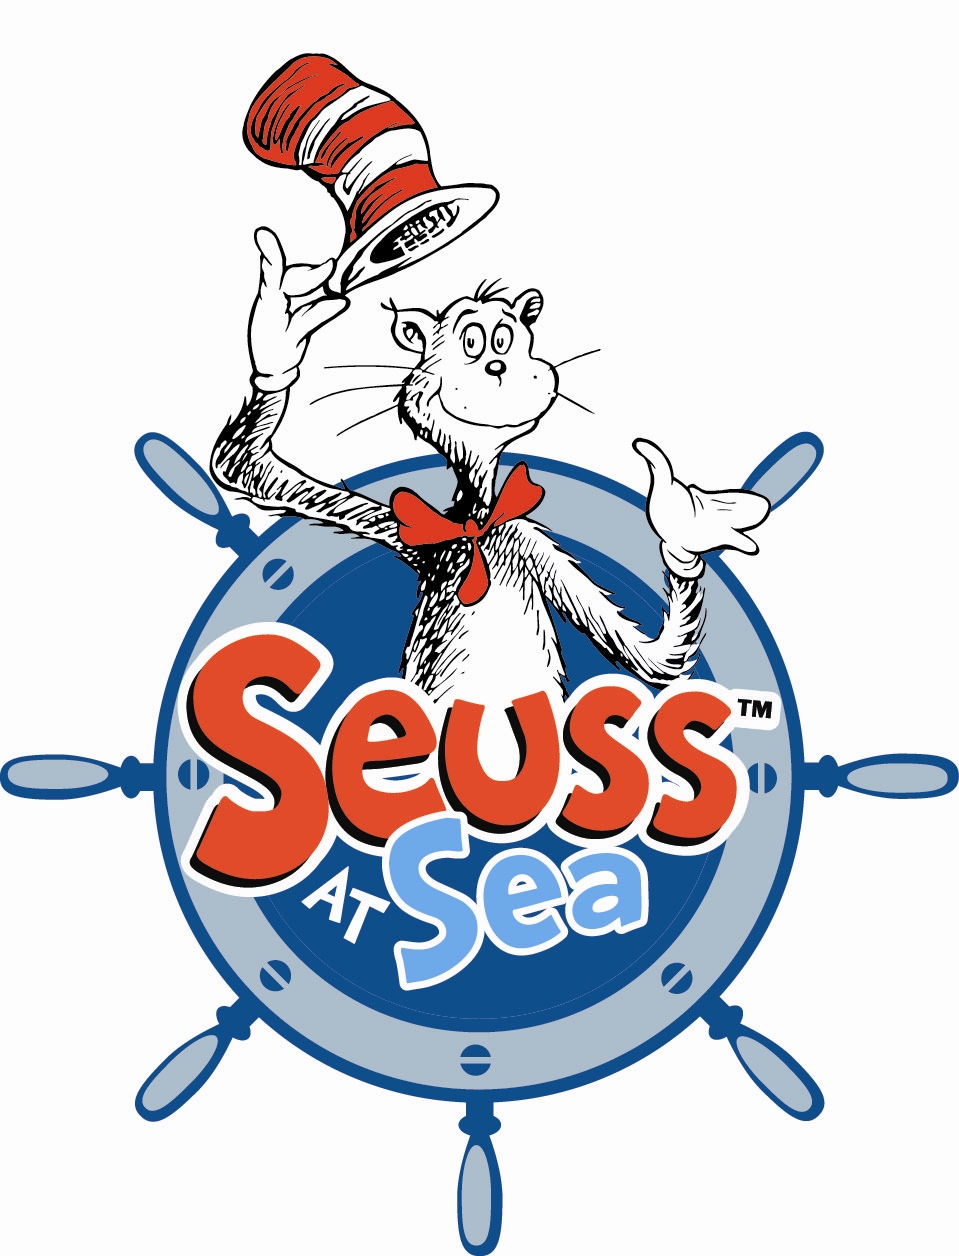 Dr. Seuss at Sea Program Carnival Cruise lines